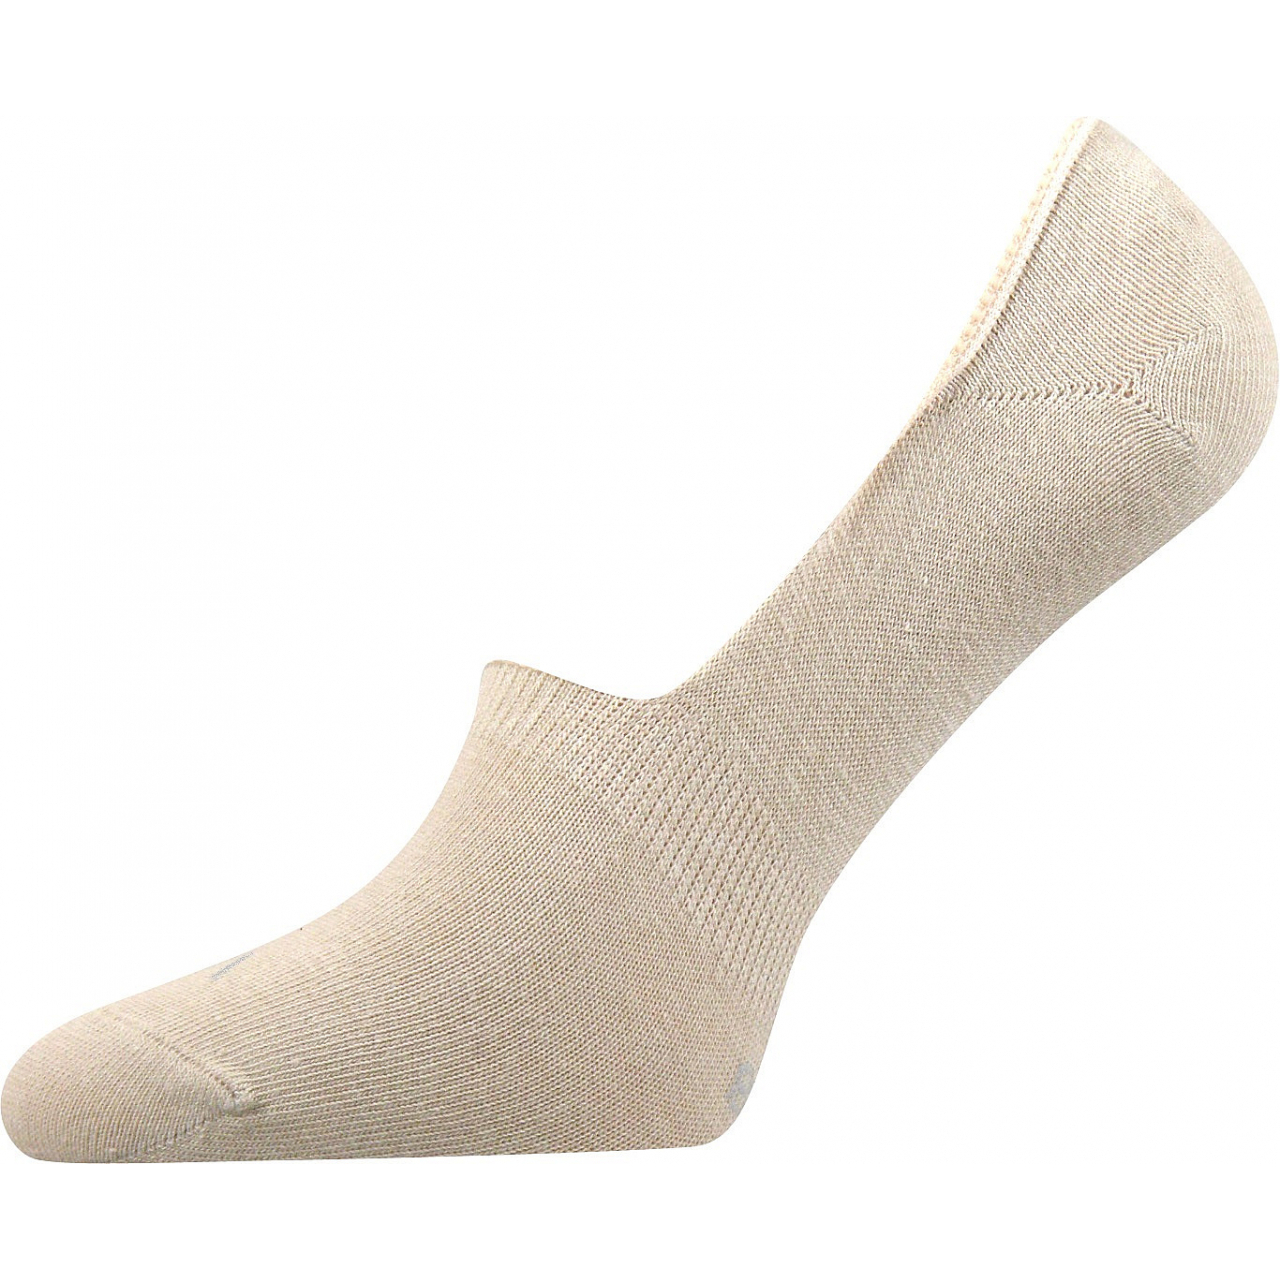 Ponožky unisex Voxx Verti - béžové, 35-38